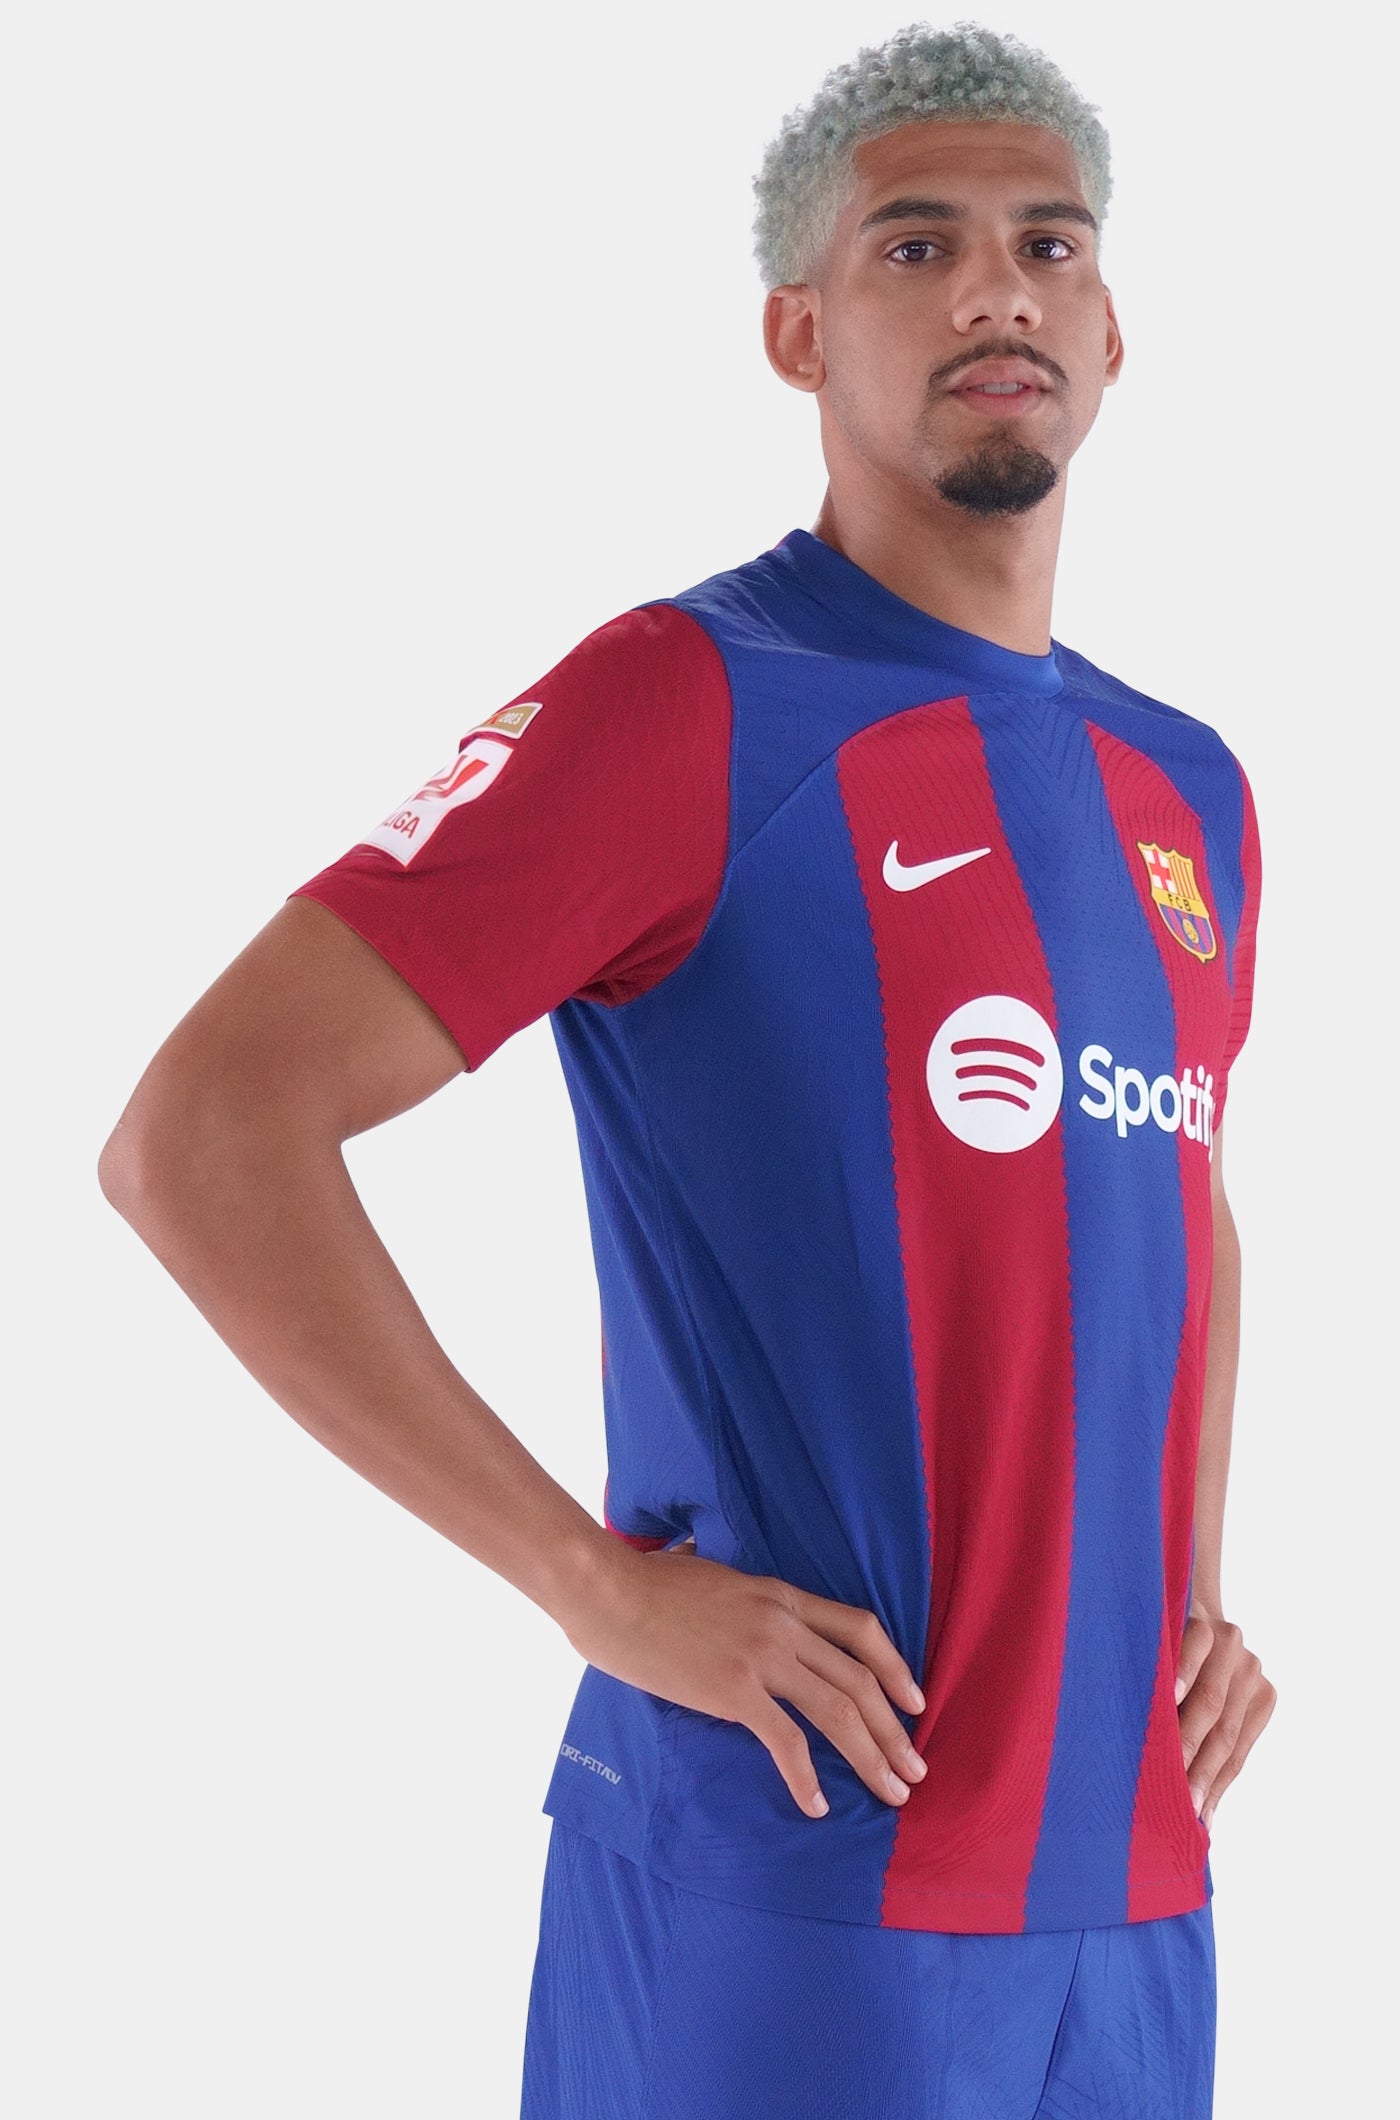 Equipaciones – Barça Official Store Spotify Camp Nou